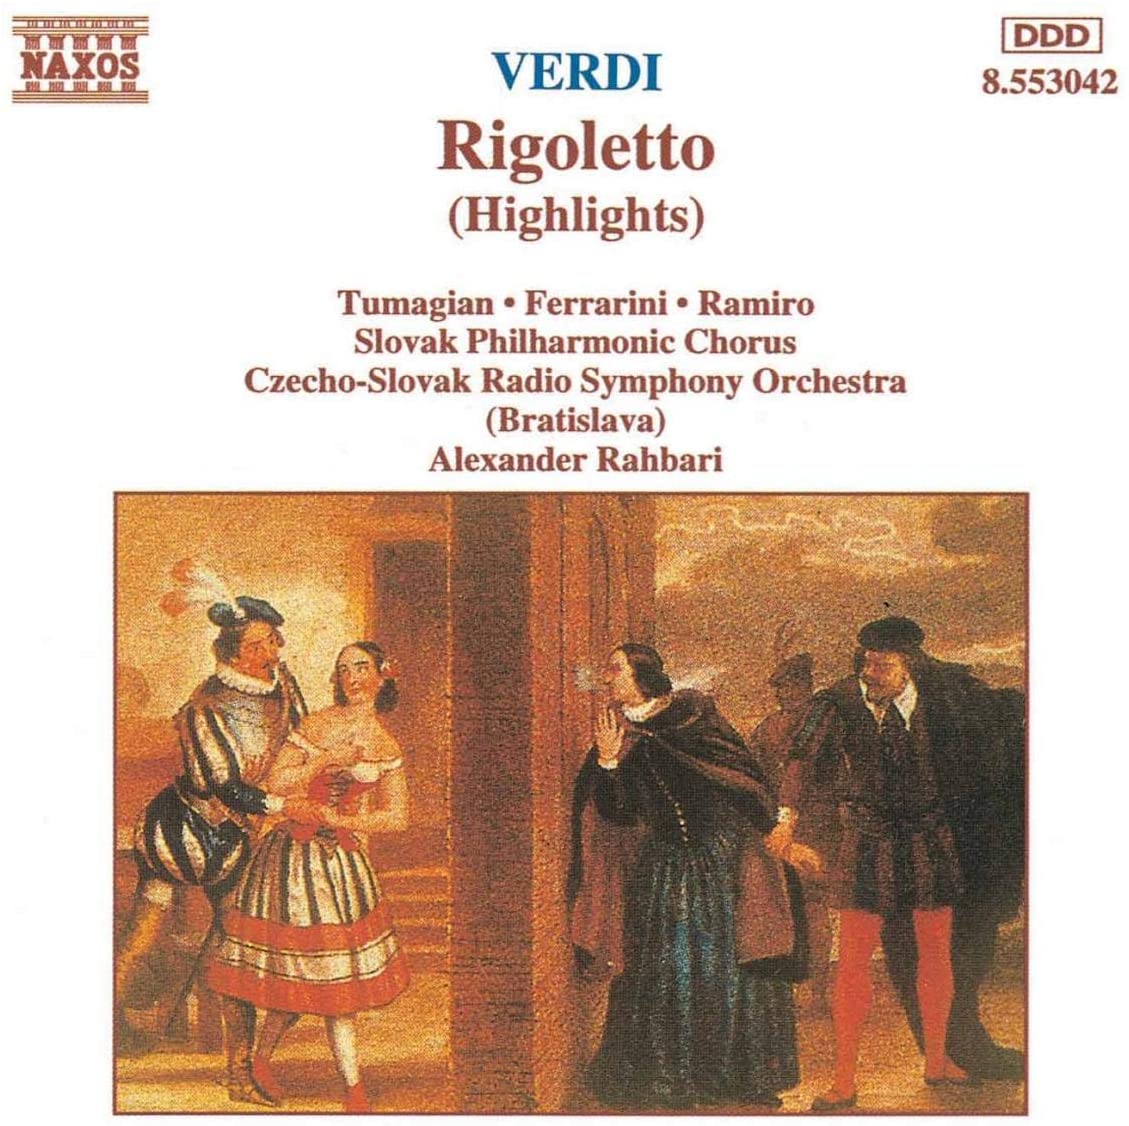 VERDI: Rigoletto (highlights)